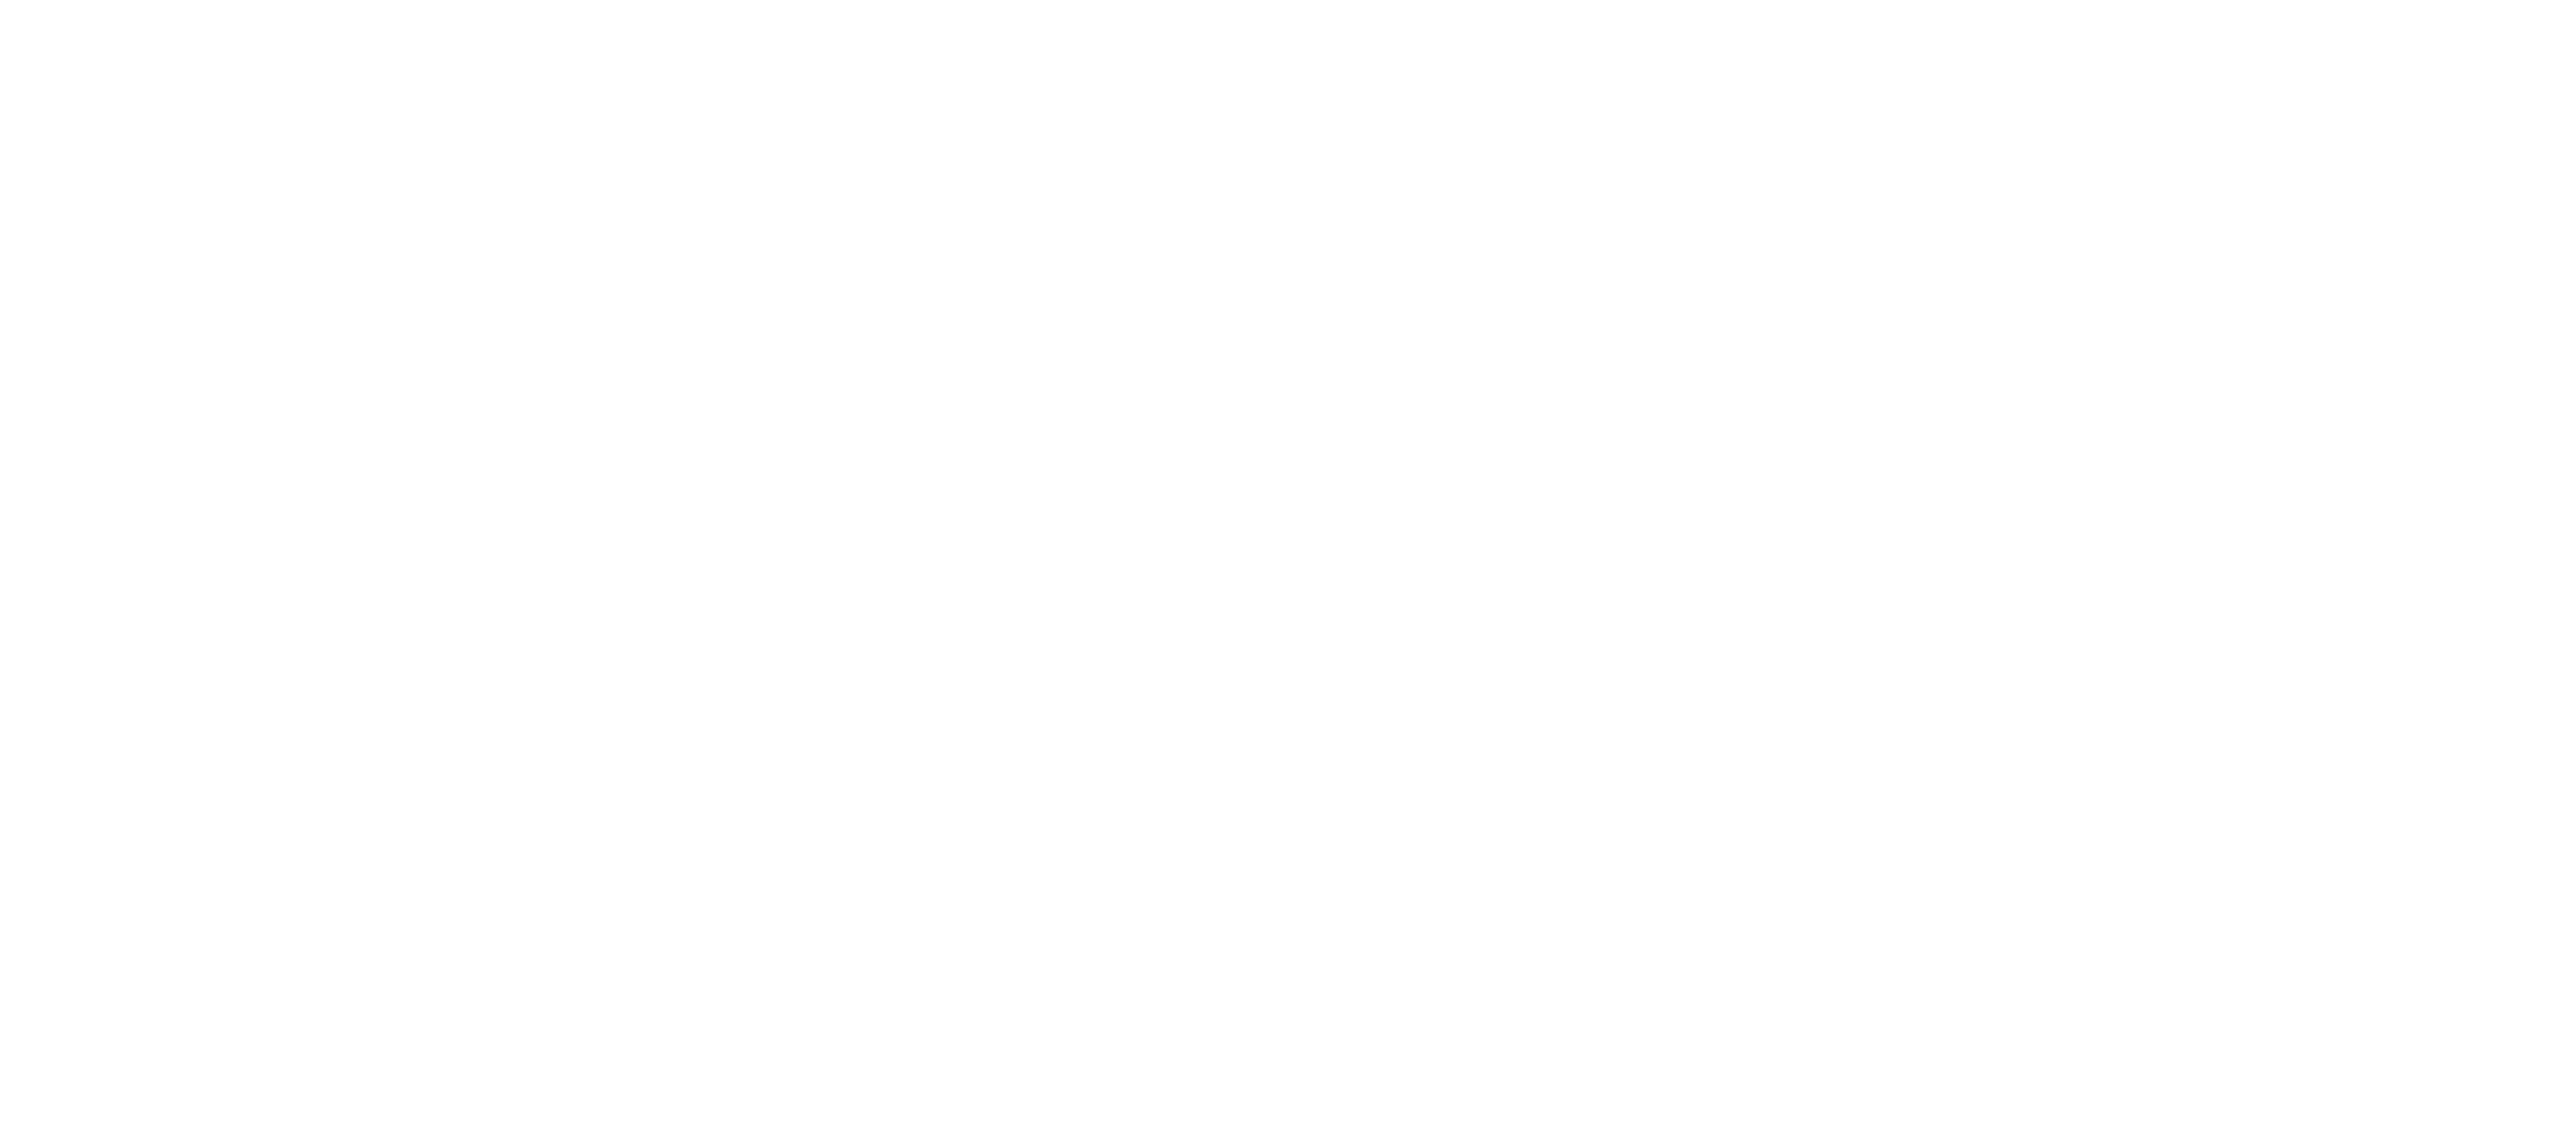 Gotcha Covered of Western Montana